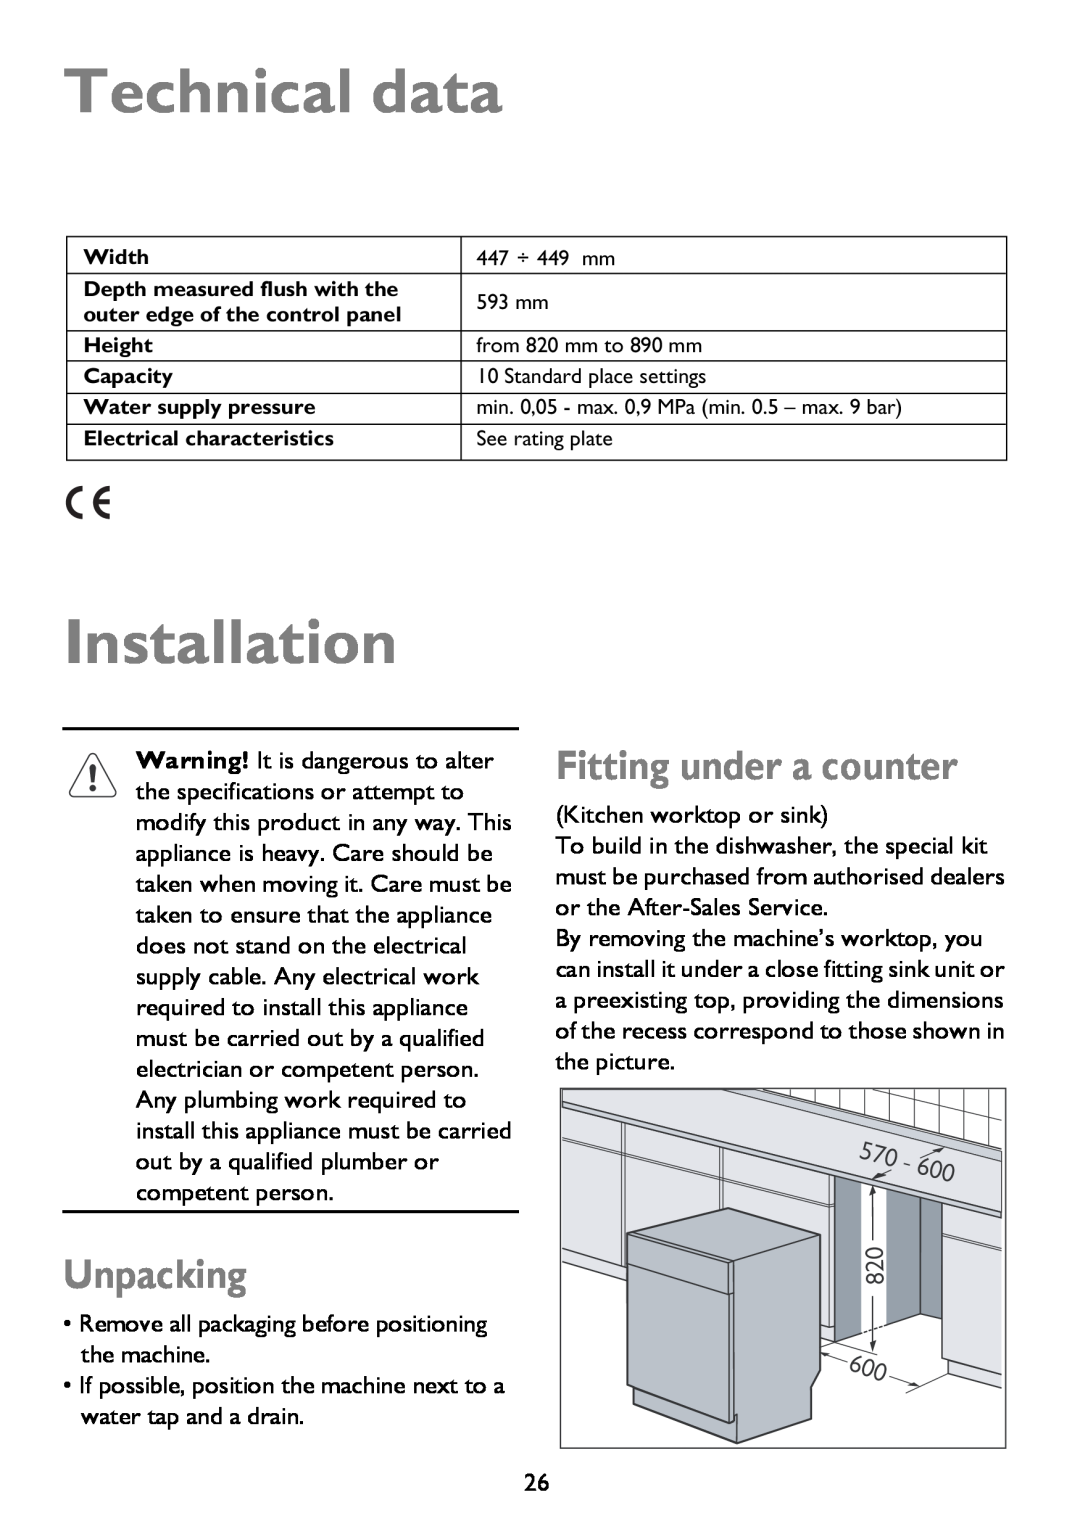 John Lewis JLDWS 907 instruction manual Technical data, Installation, Unpacking, Fitting under a counter 